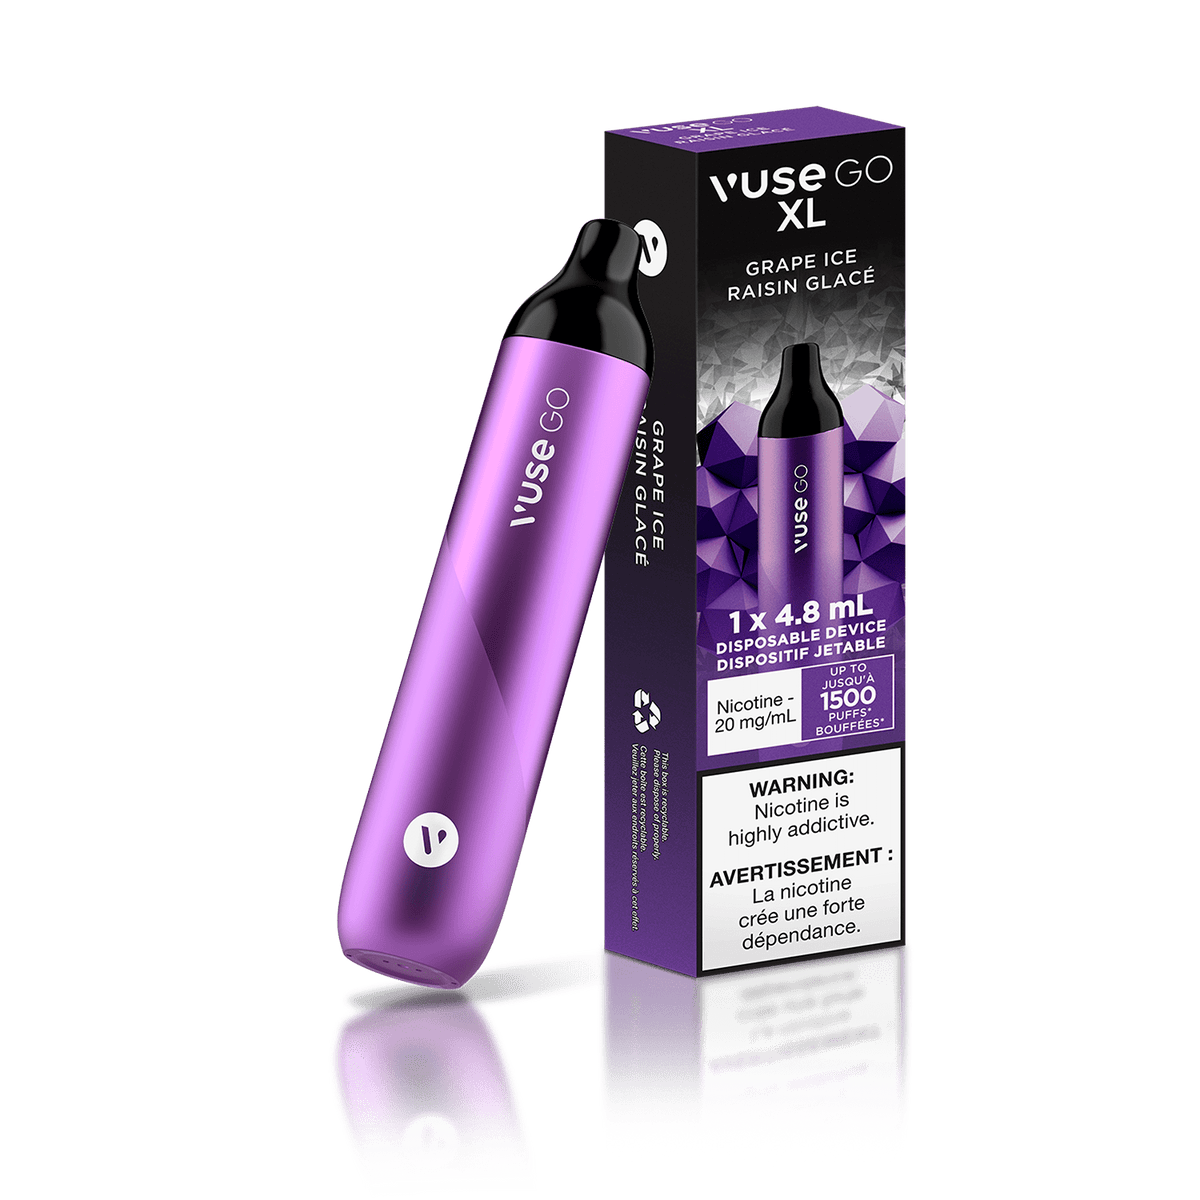 Vuse GO XL Disposable Vape - Grape Ice available on Canada online vape shop